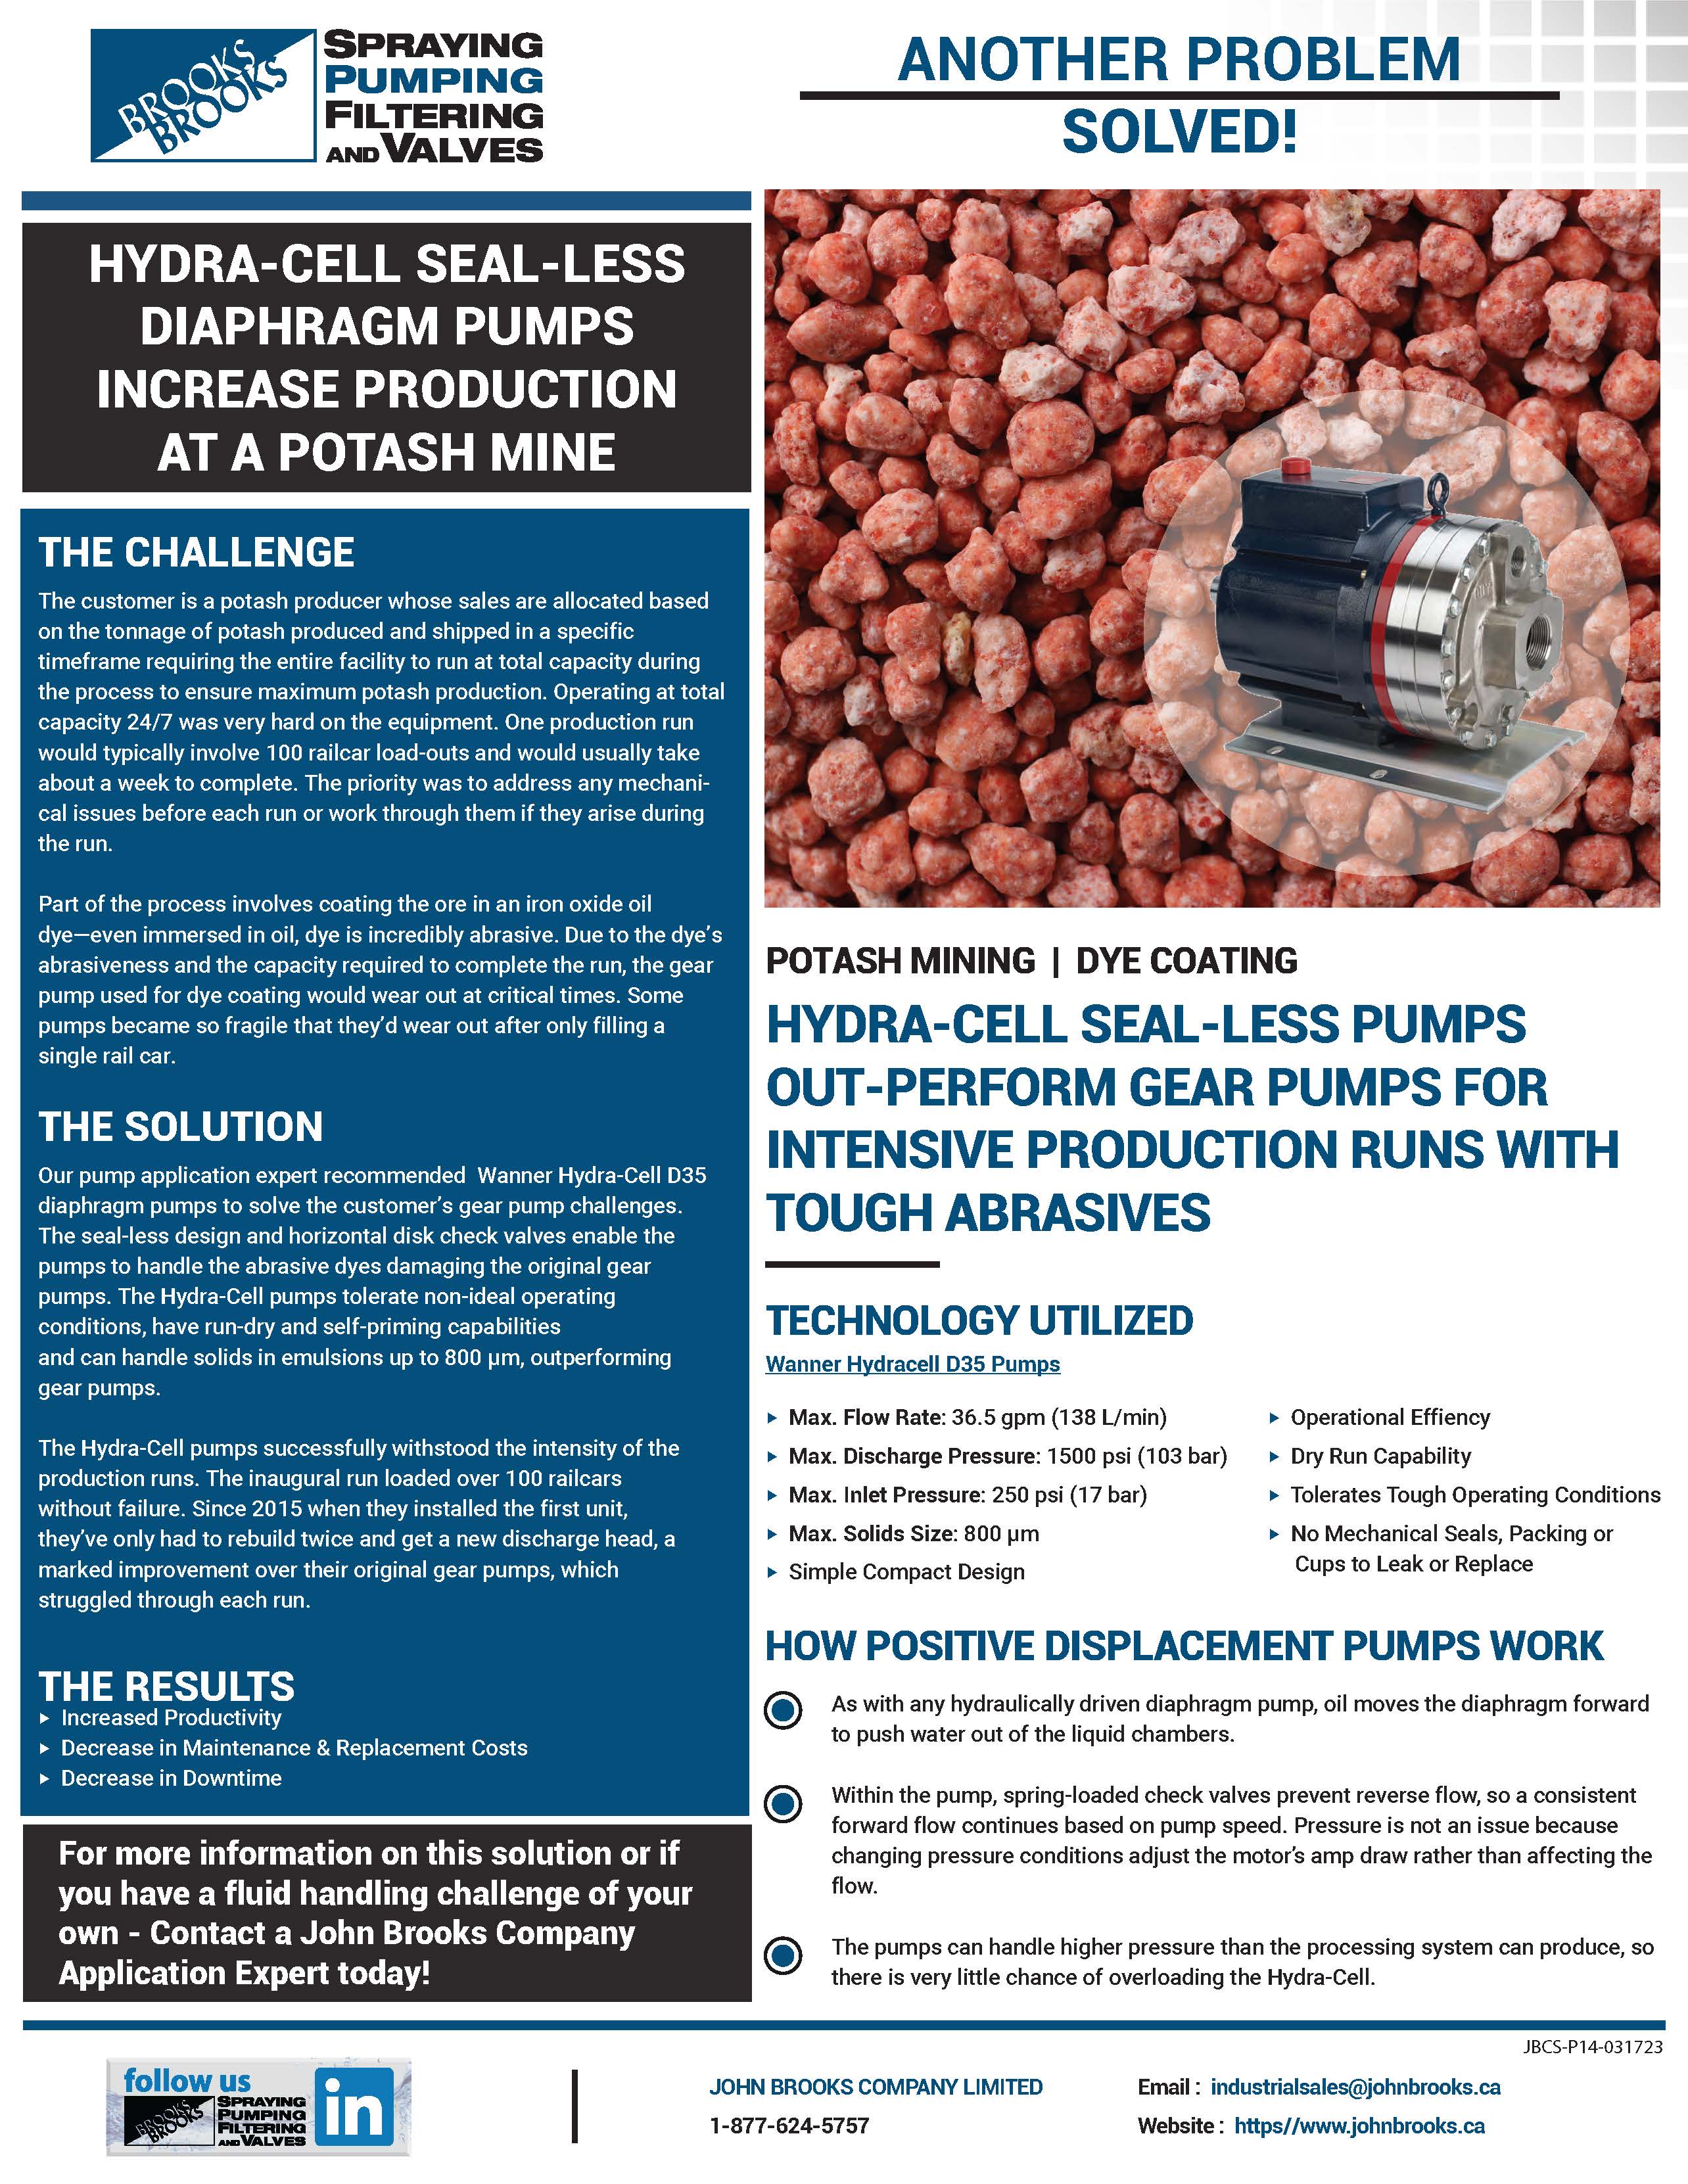 Hydra-Cell D35 Seal-less Diaphragm Pumps for Potash Dye Coating